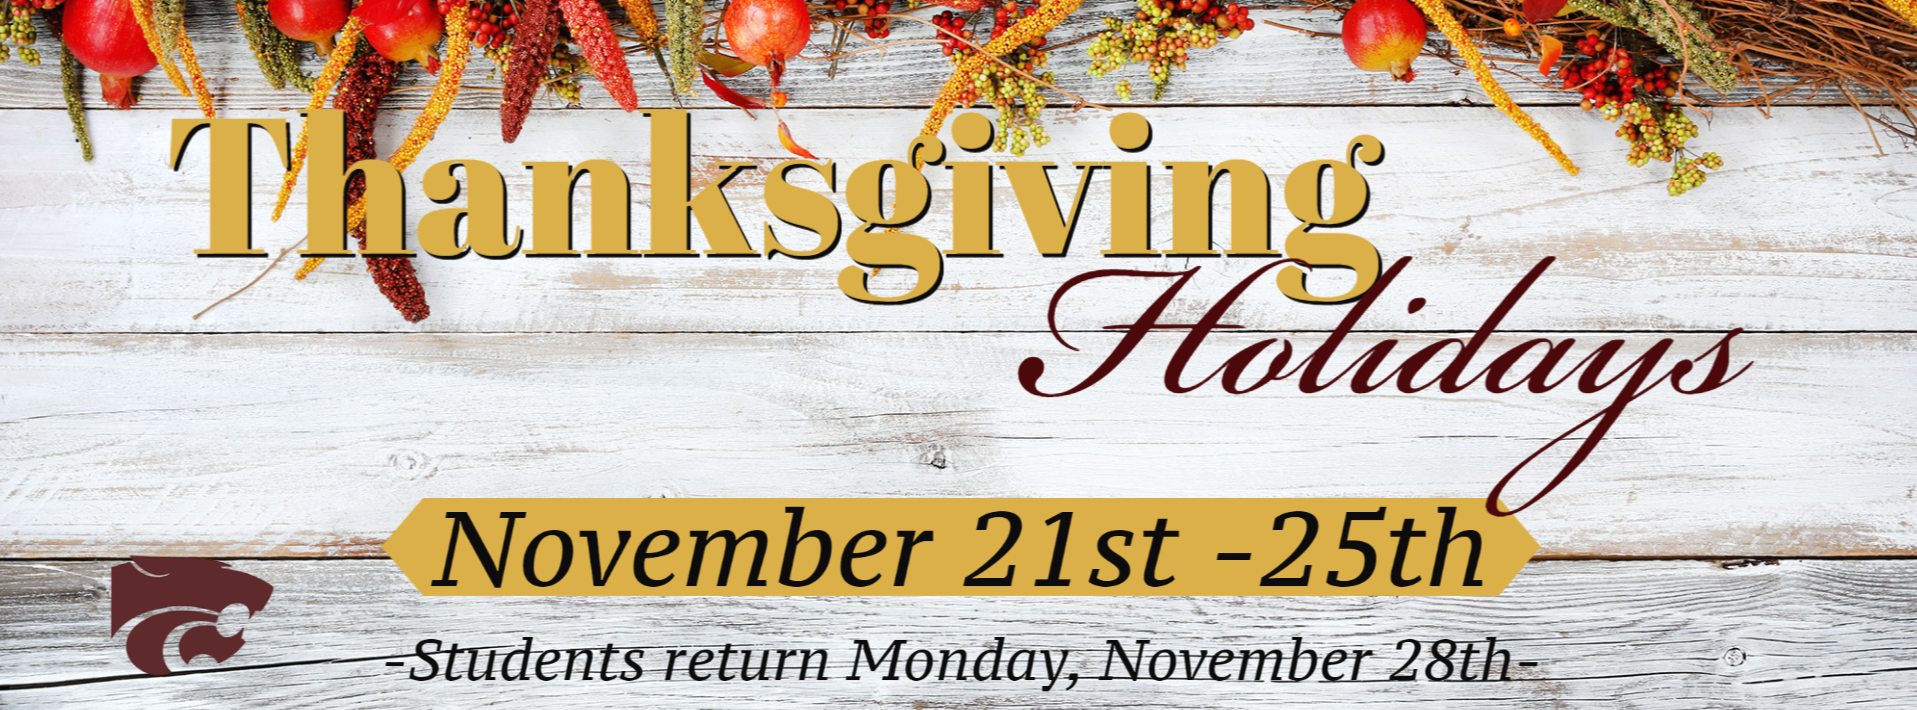 Thanksgiving Holidays, November 21st - 25th Students Return Monday November 28th 